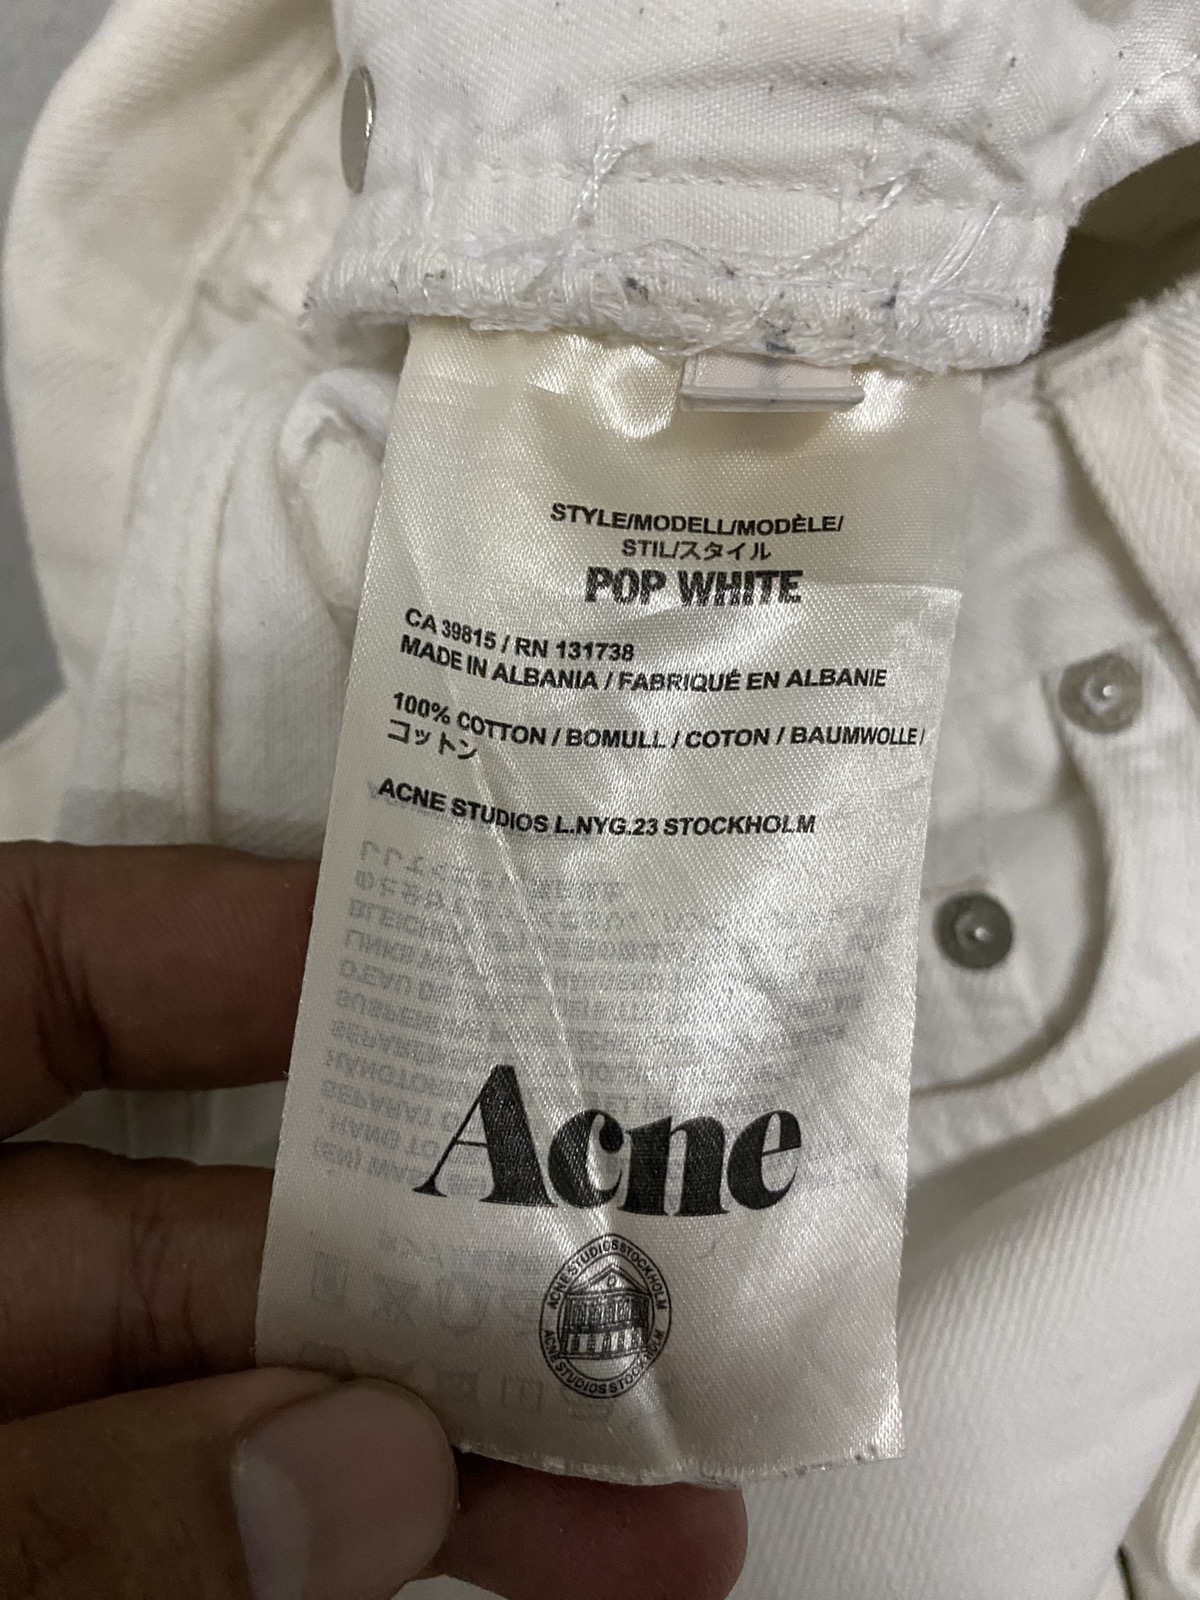 Vintage Acne Studios Pop White Denim Jeans - 9